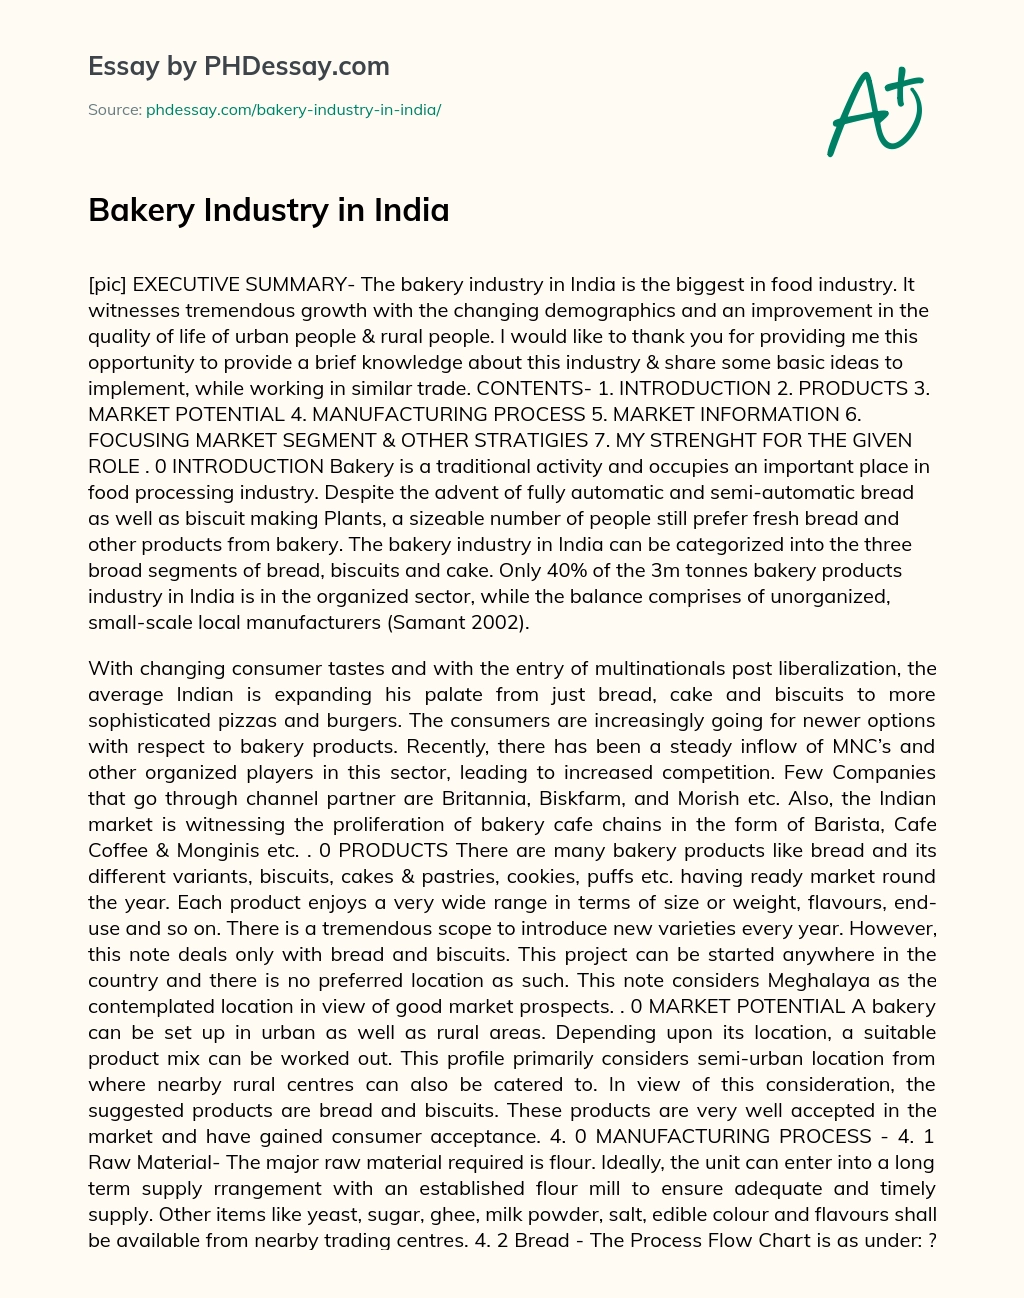 Bakery Industry in India essay